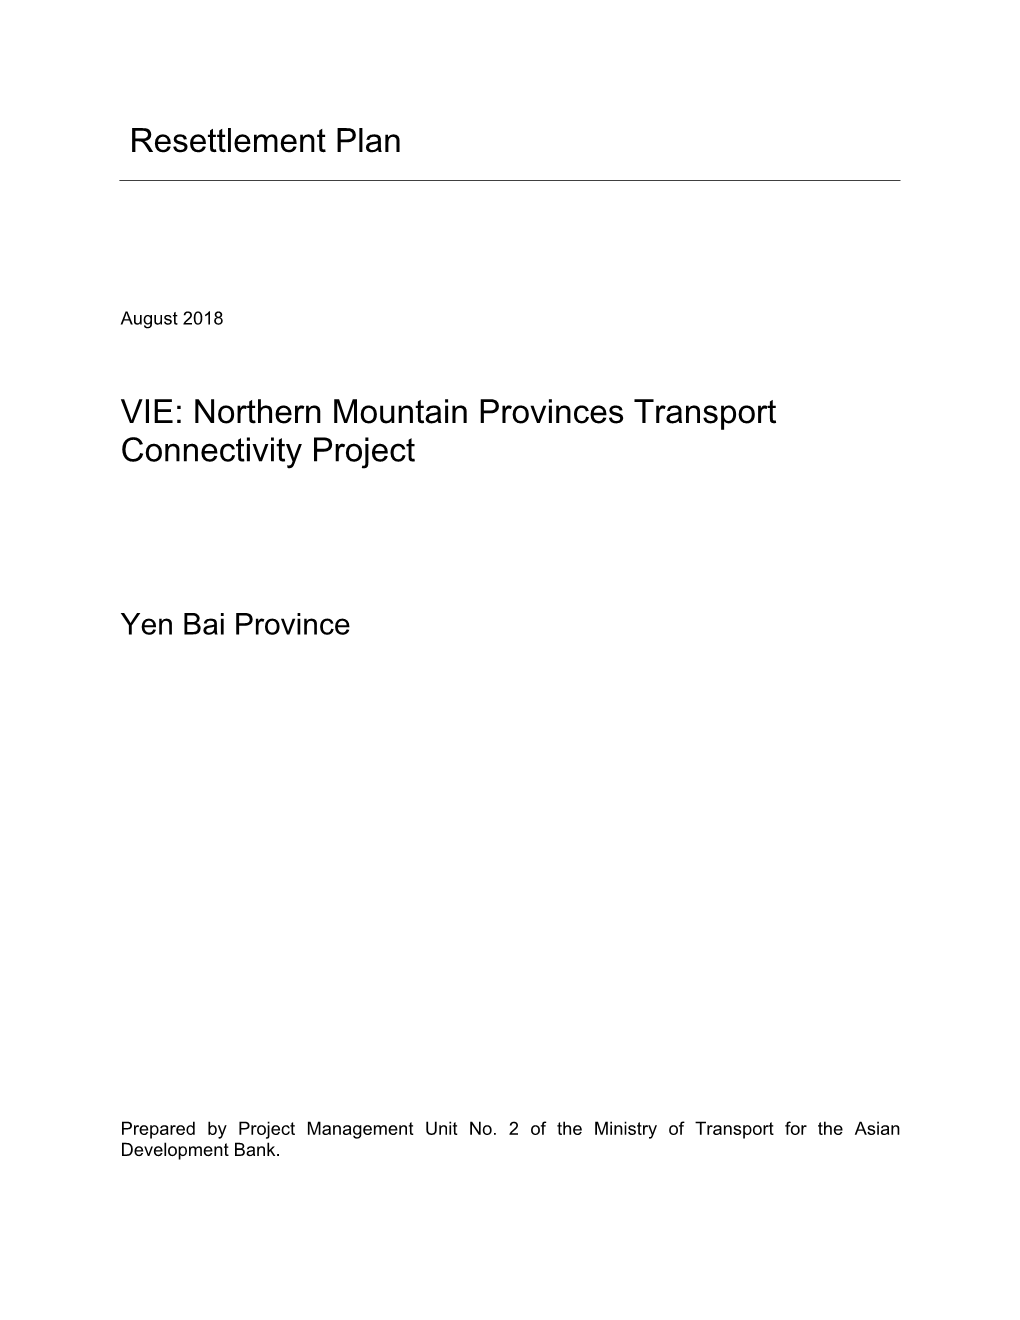 Resettlement Plan VIE: Northern Mountain Provinces Transport